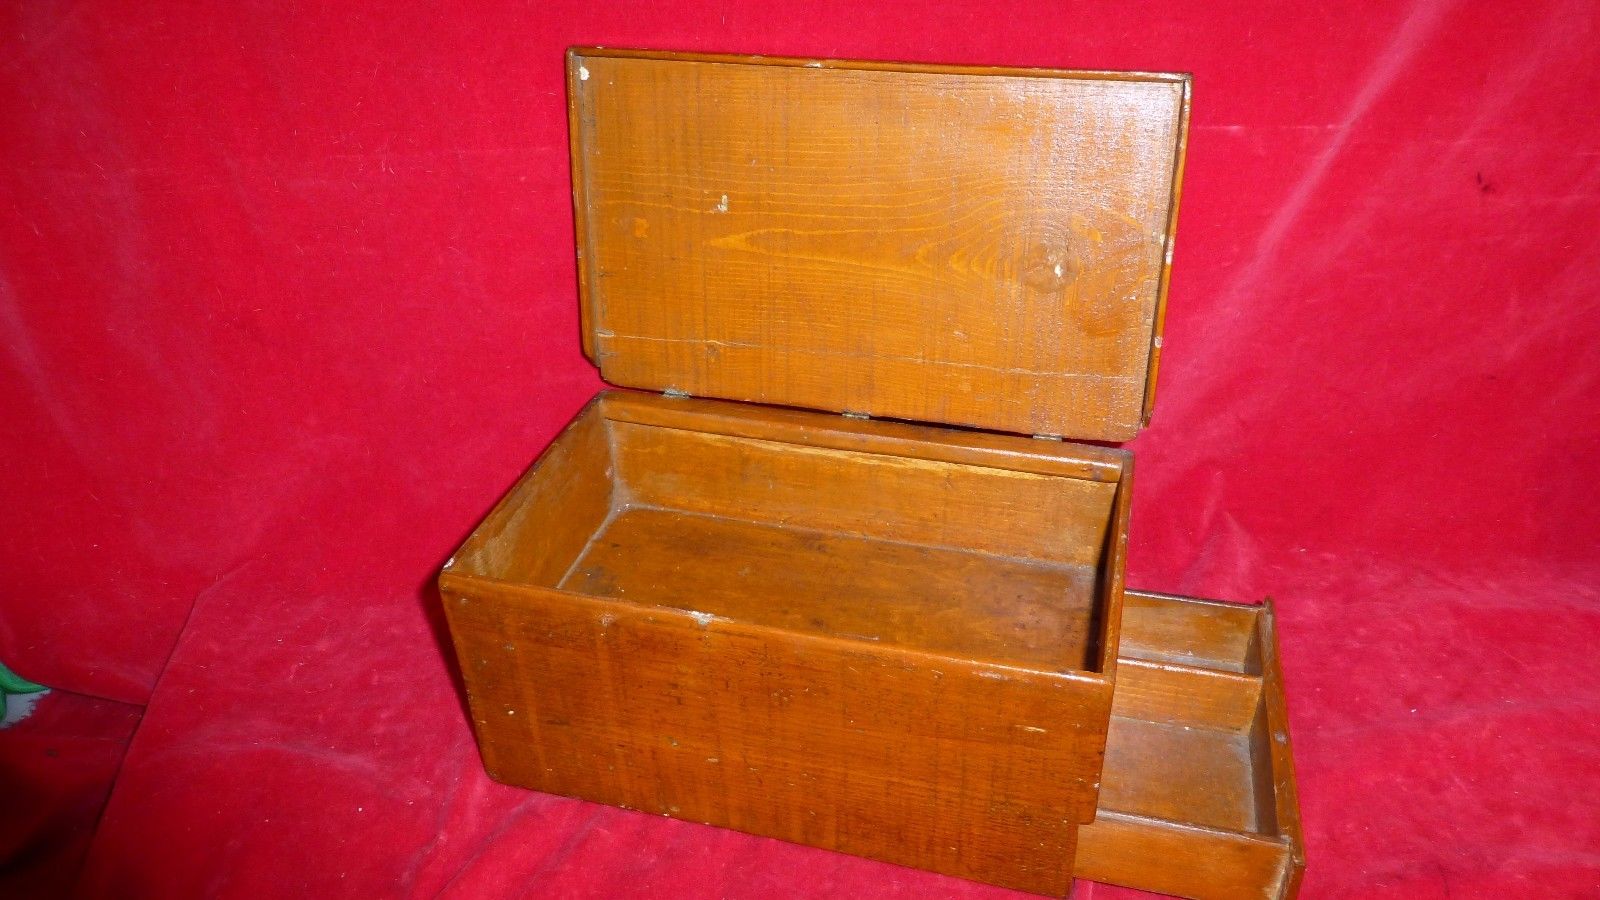 Wonderful Civil War Era Small Document Box With False Bottom And